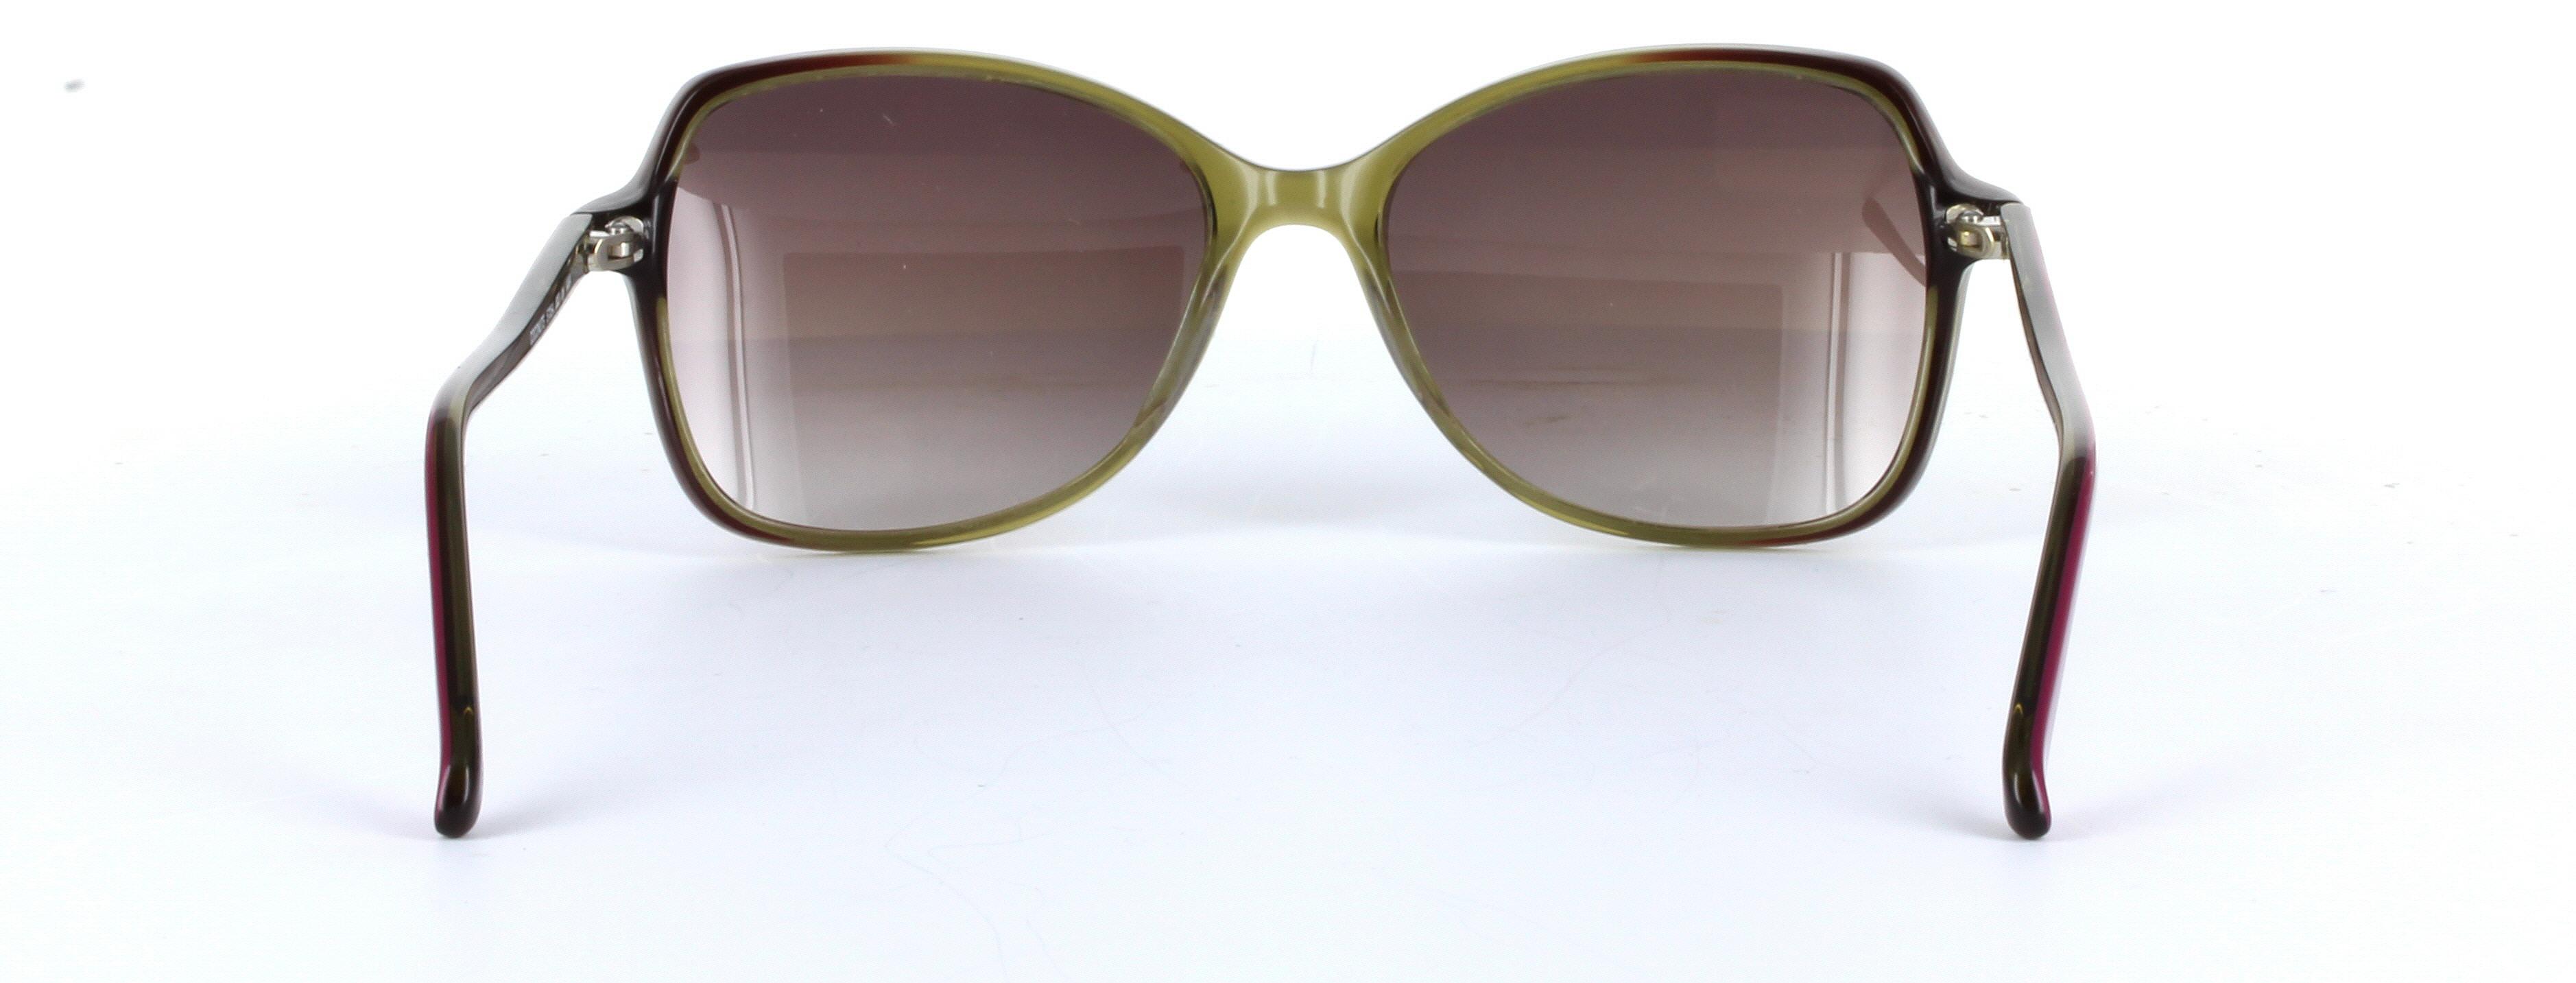 Coconuts Green and Burgundy Full Rim Plastic Sunglasses - Image View 3